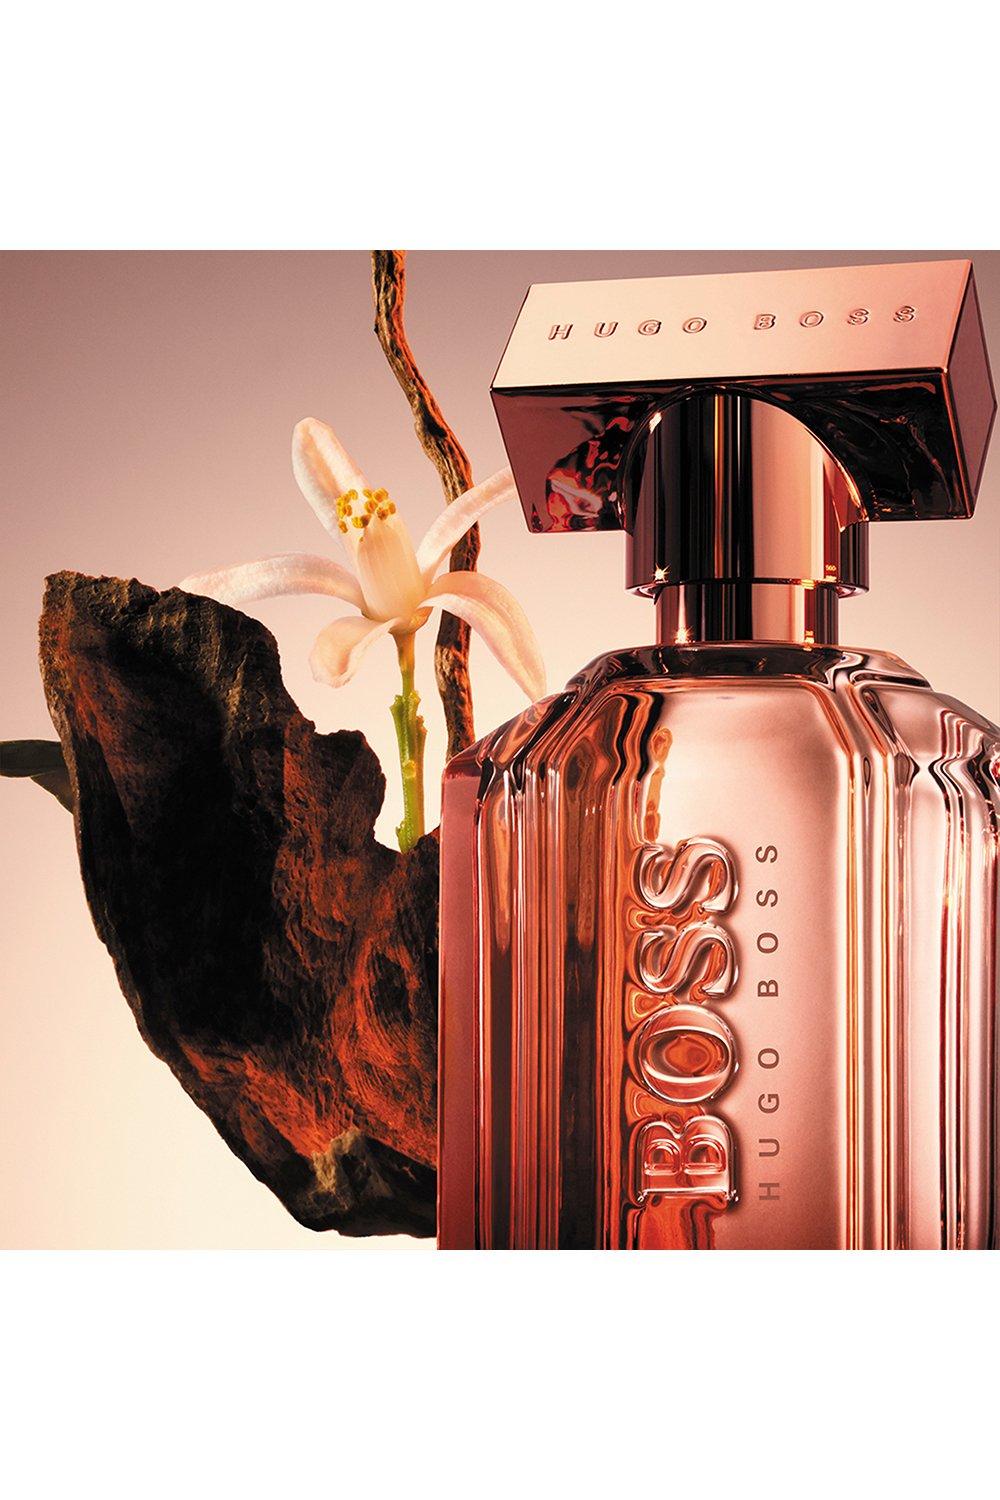 Хуго босс сент. Hugo Boss the Scent le Parfum. Hugo Boss Boss the Scent, 100 ml. Hugo Boss the Scent le Parfum 100 ml. The Scent Hugo Boss женские.